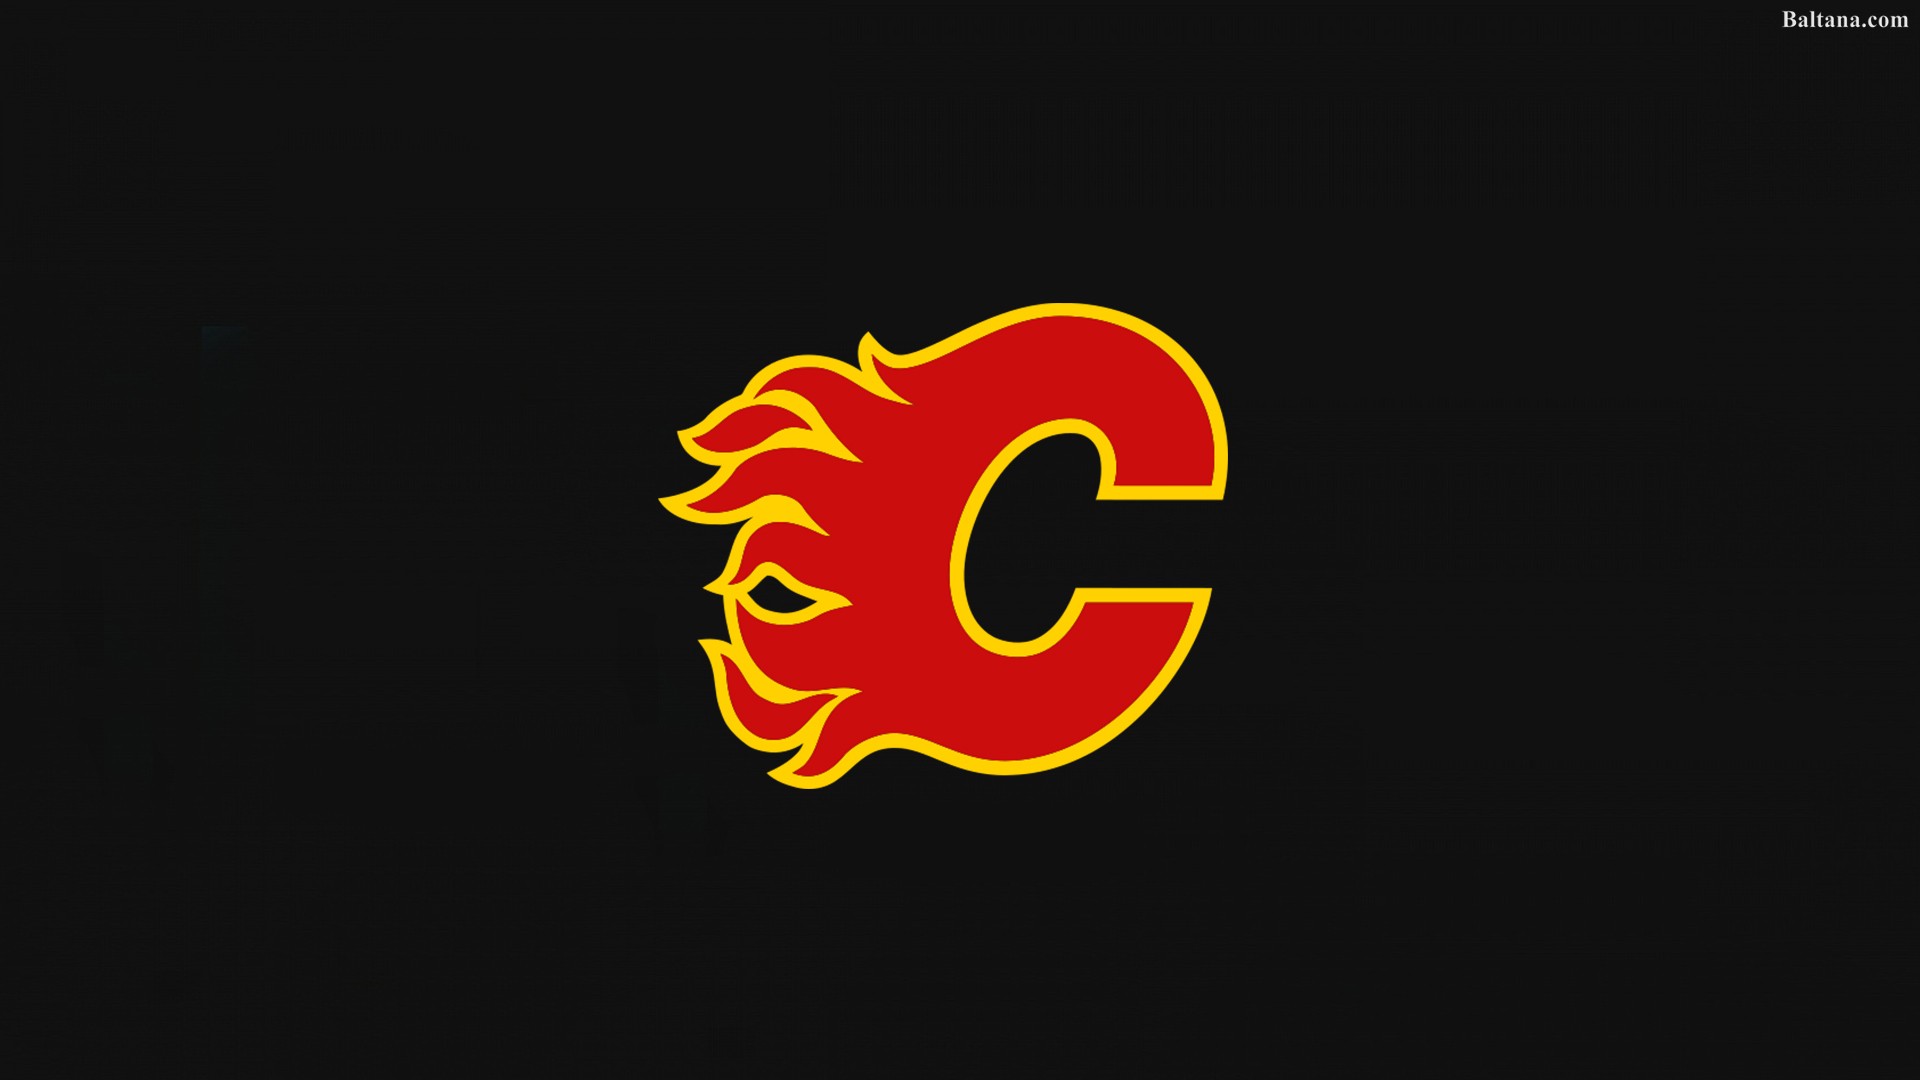 Calgary Flames High Definition Wallpaper 33737 - Baltana